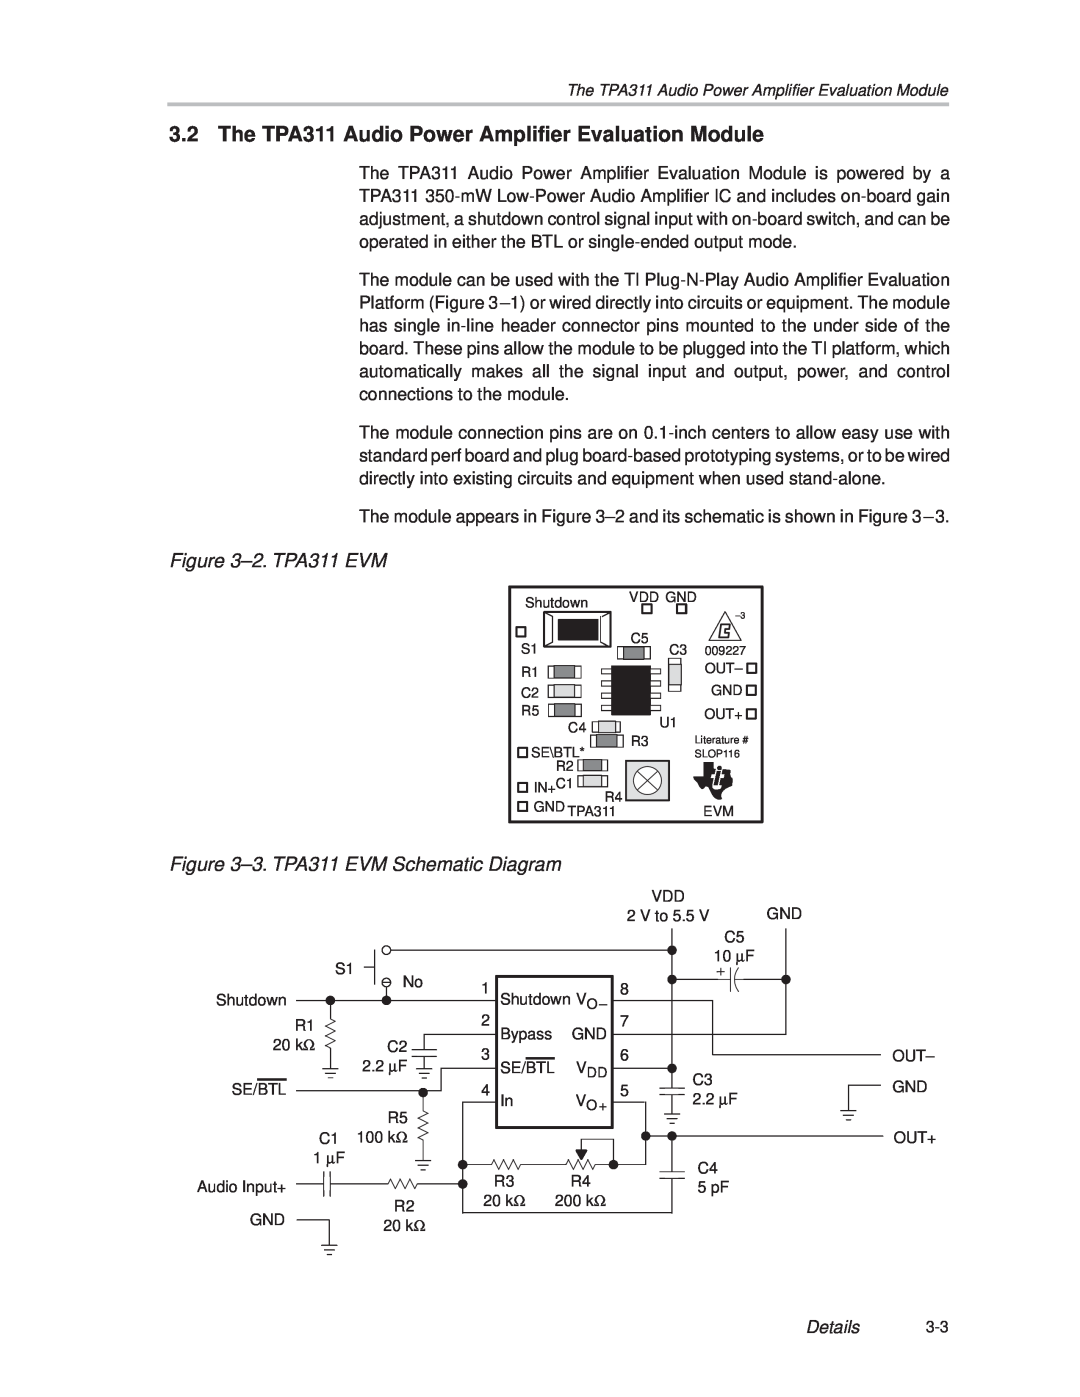 Texas Instruments TPA 311 manual The TPA311 Audio Power Amplifier Evaluation Module, ±2. TPA311 EVM, Details 